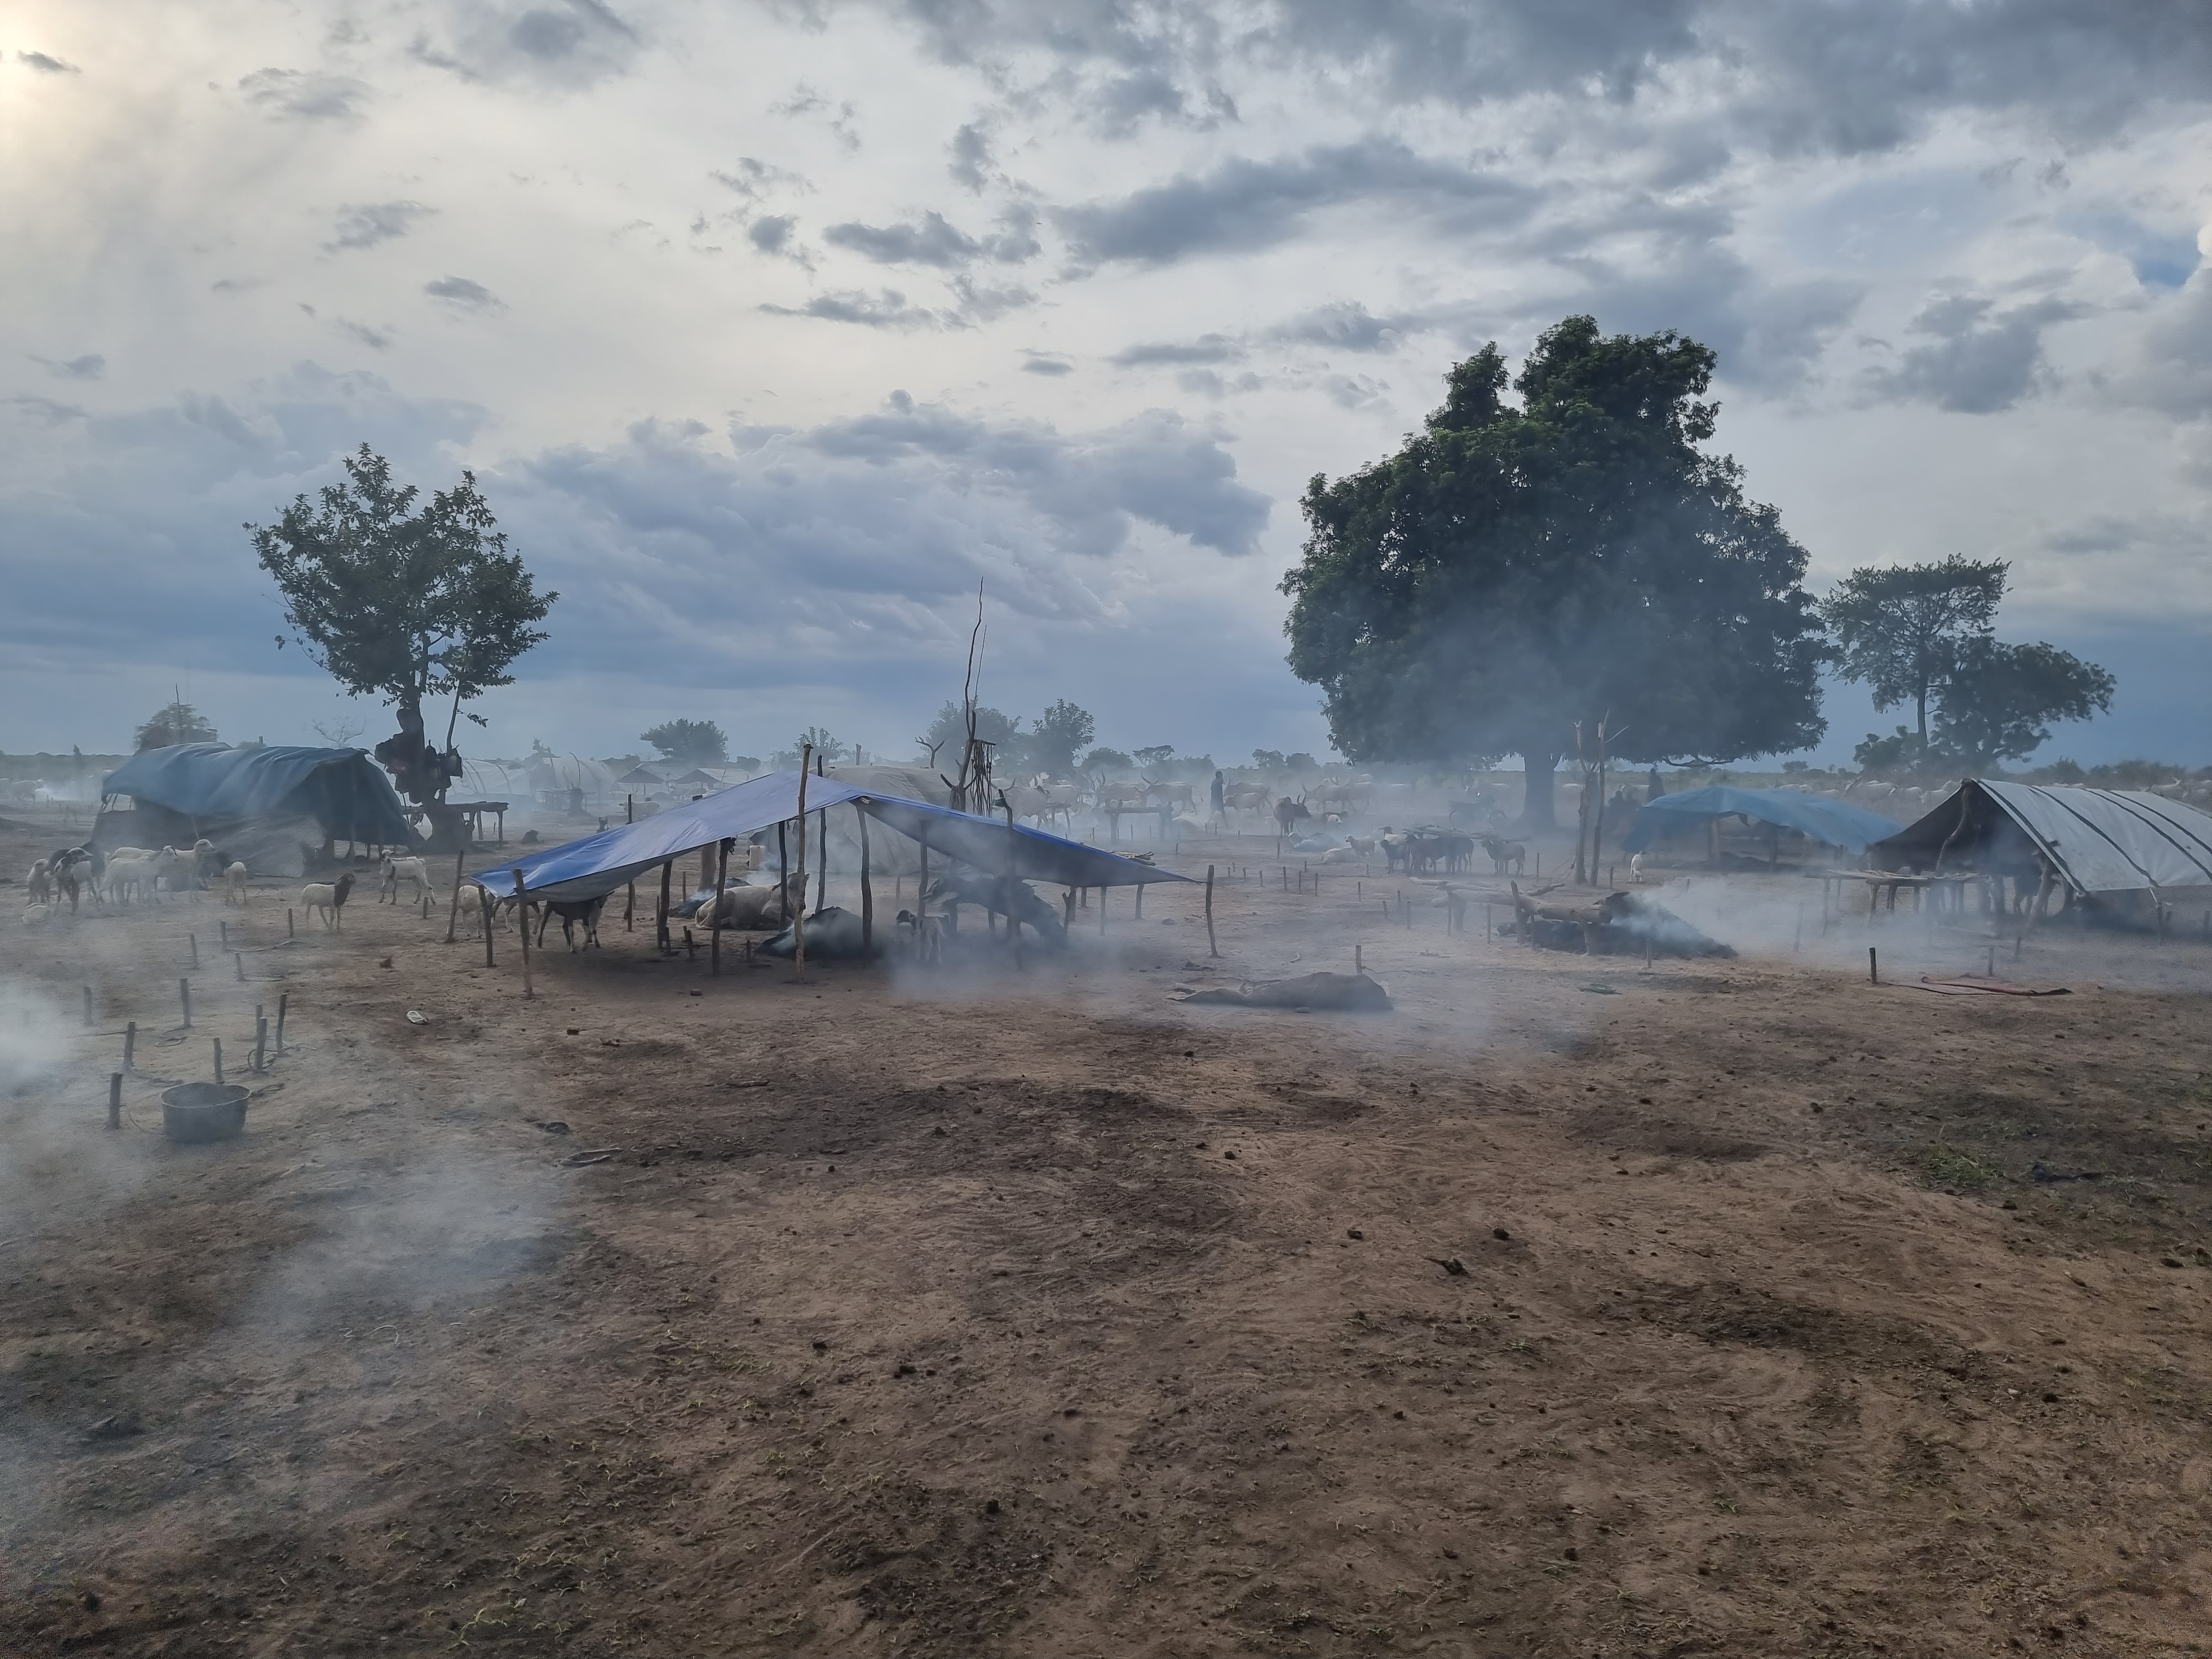 mundari cattle camp south sudan